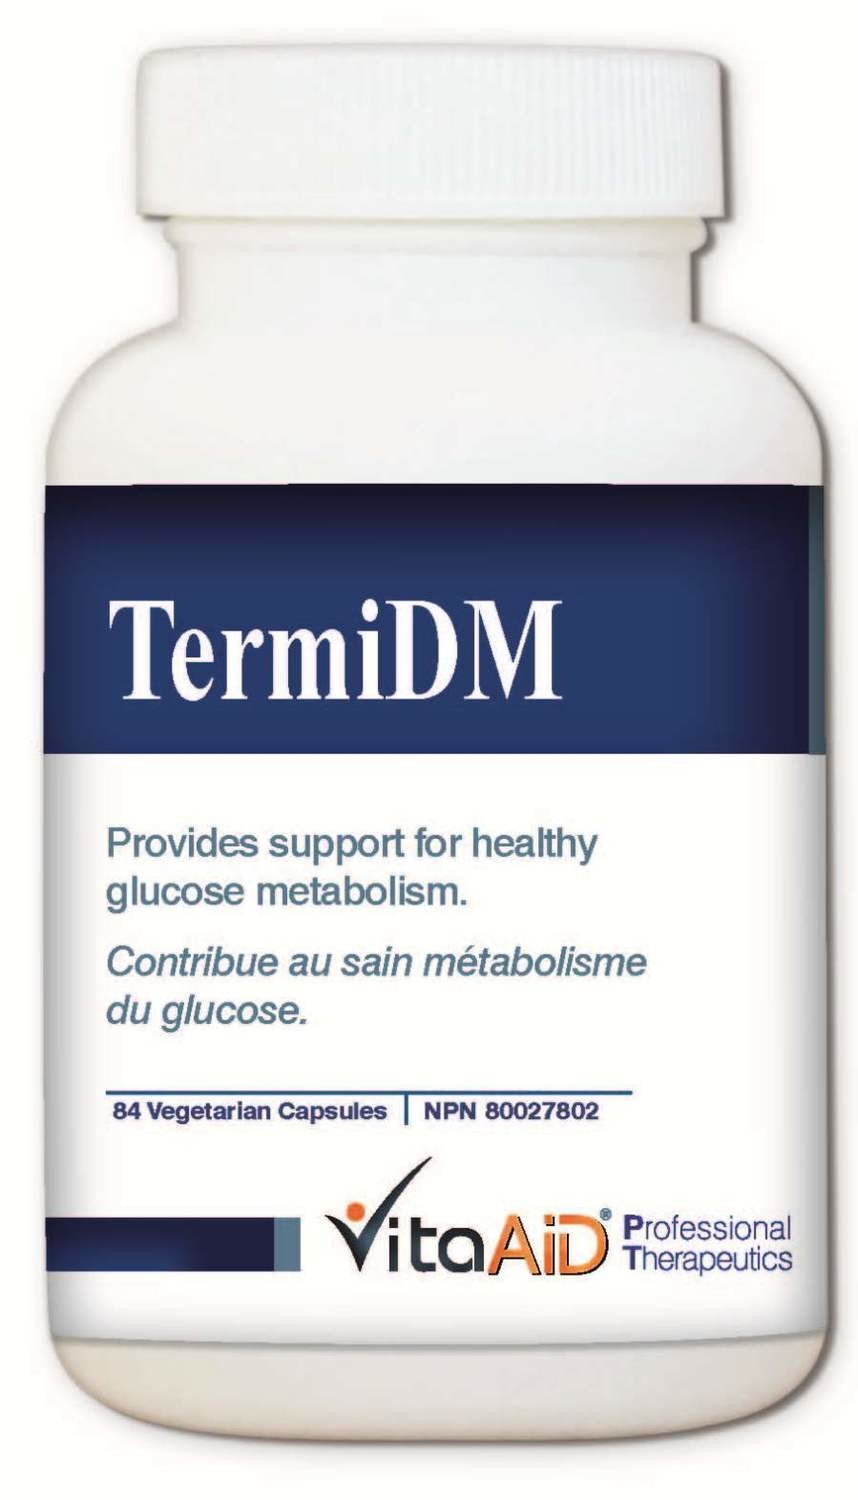 Termi DM (Diabetes) by Vita Aid